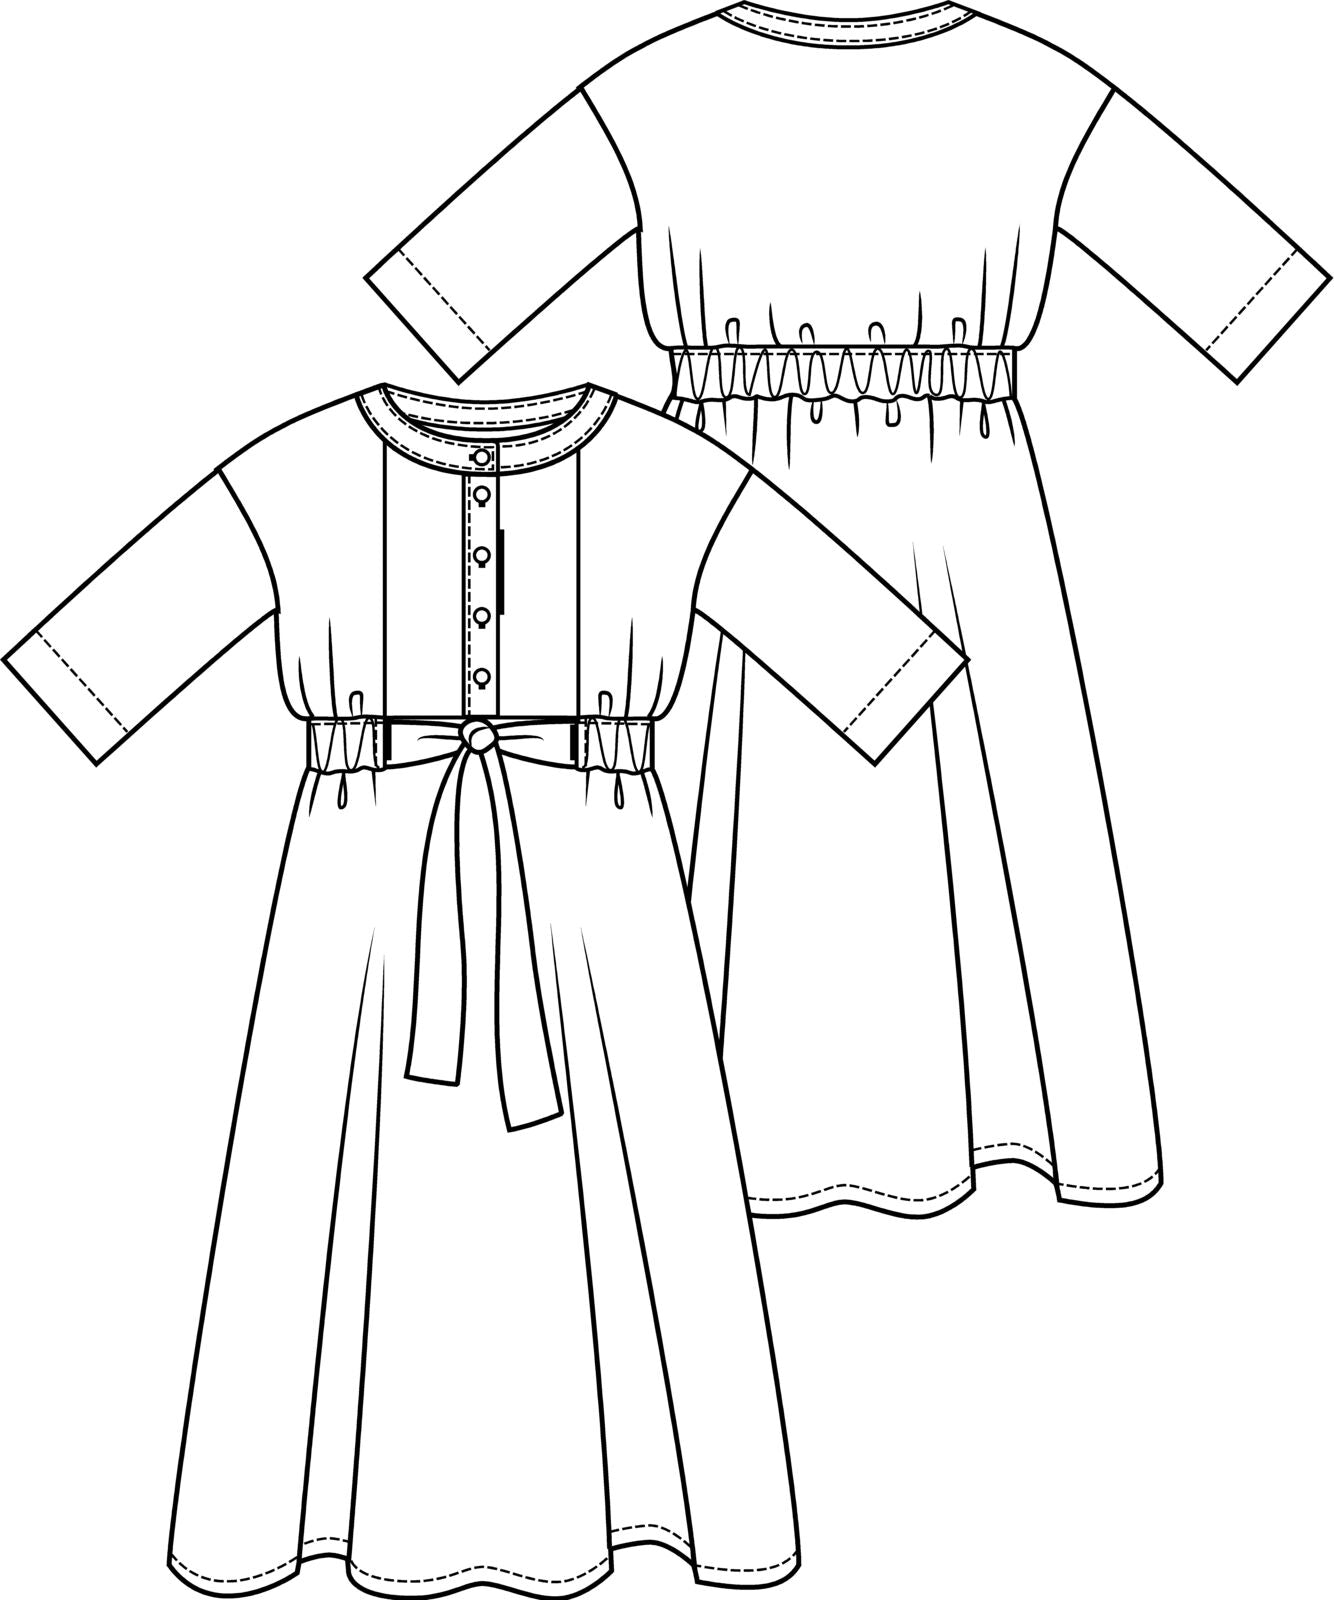 Schnitt 1804 - 02 Kleid